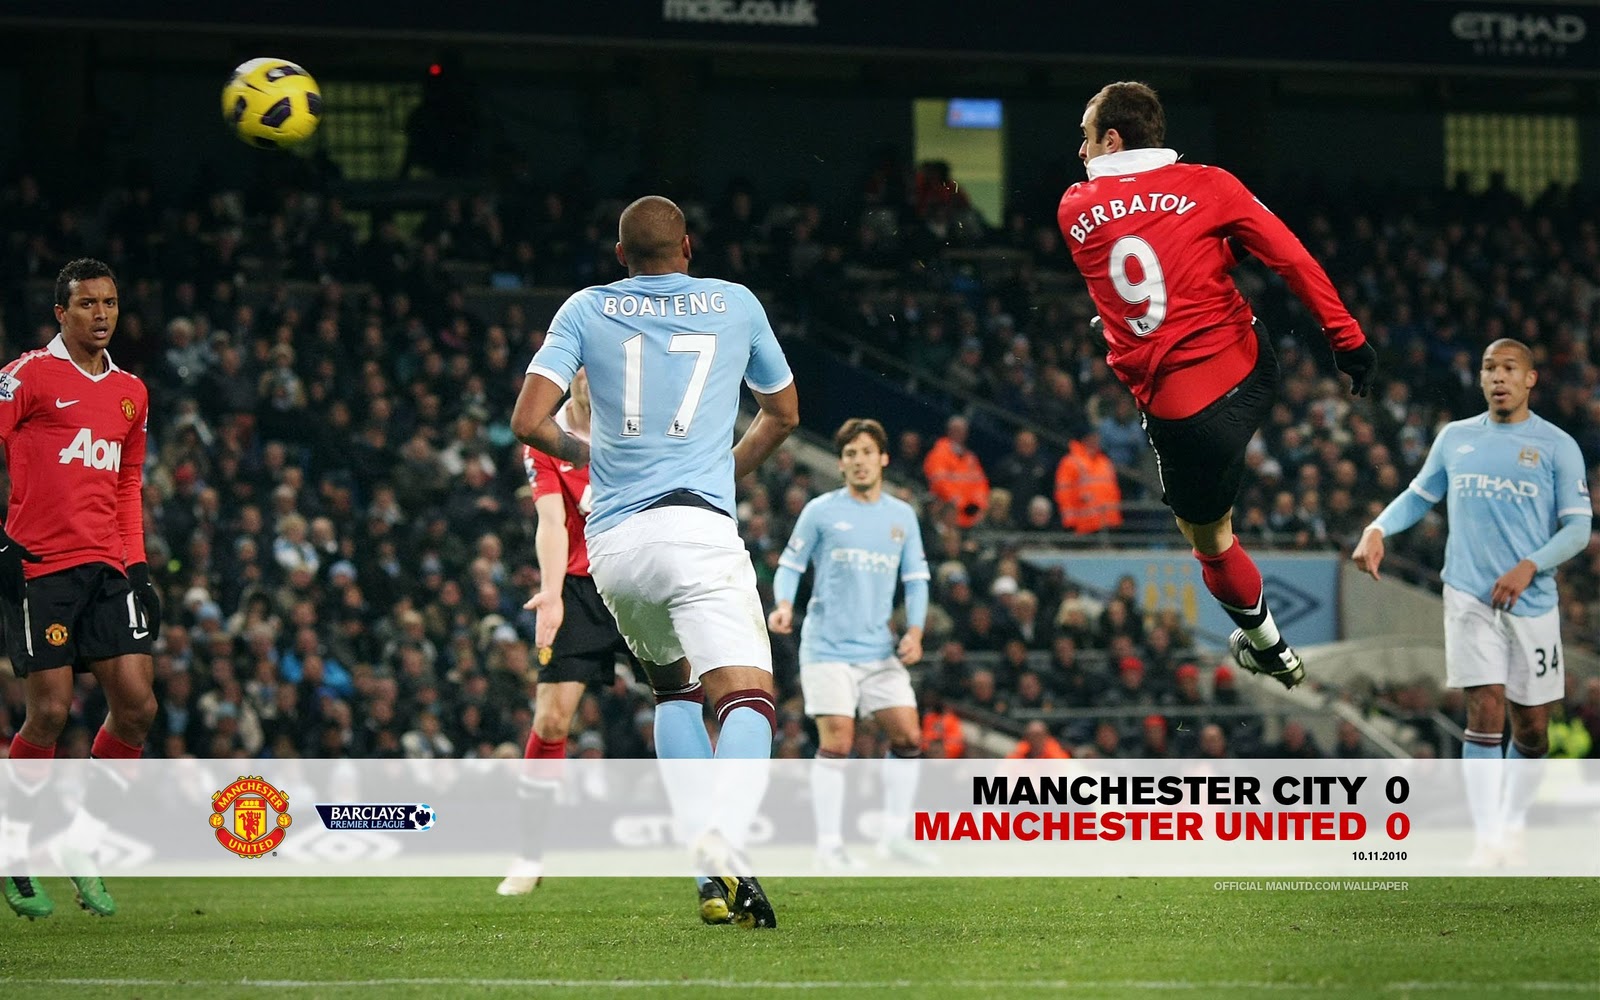 Manchester City Vs Manchester United Wallpaper 2010/11